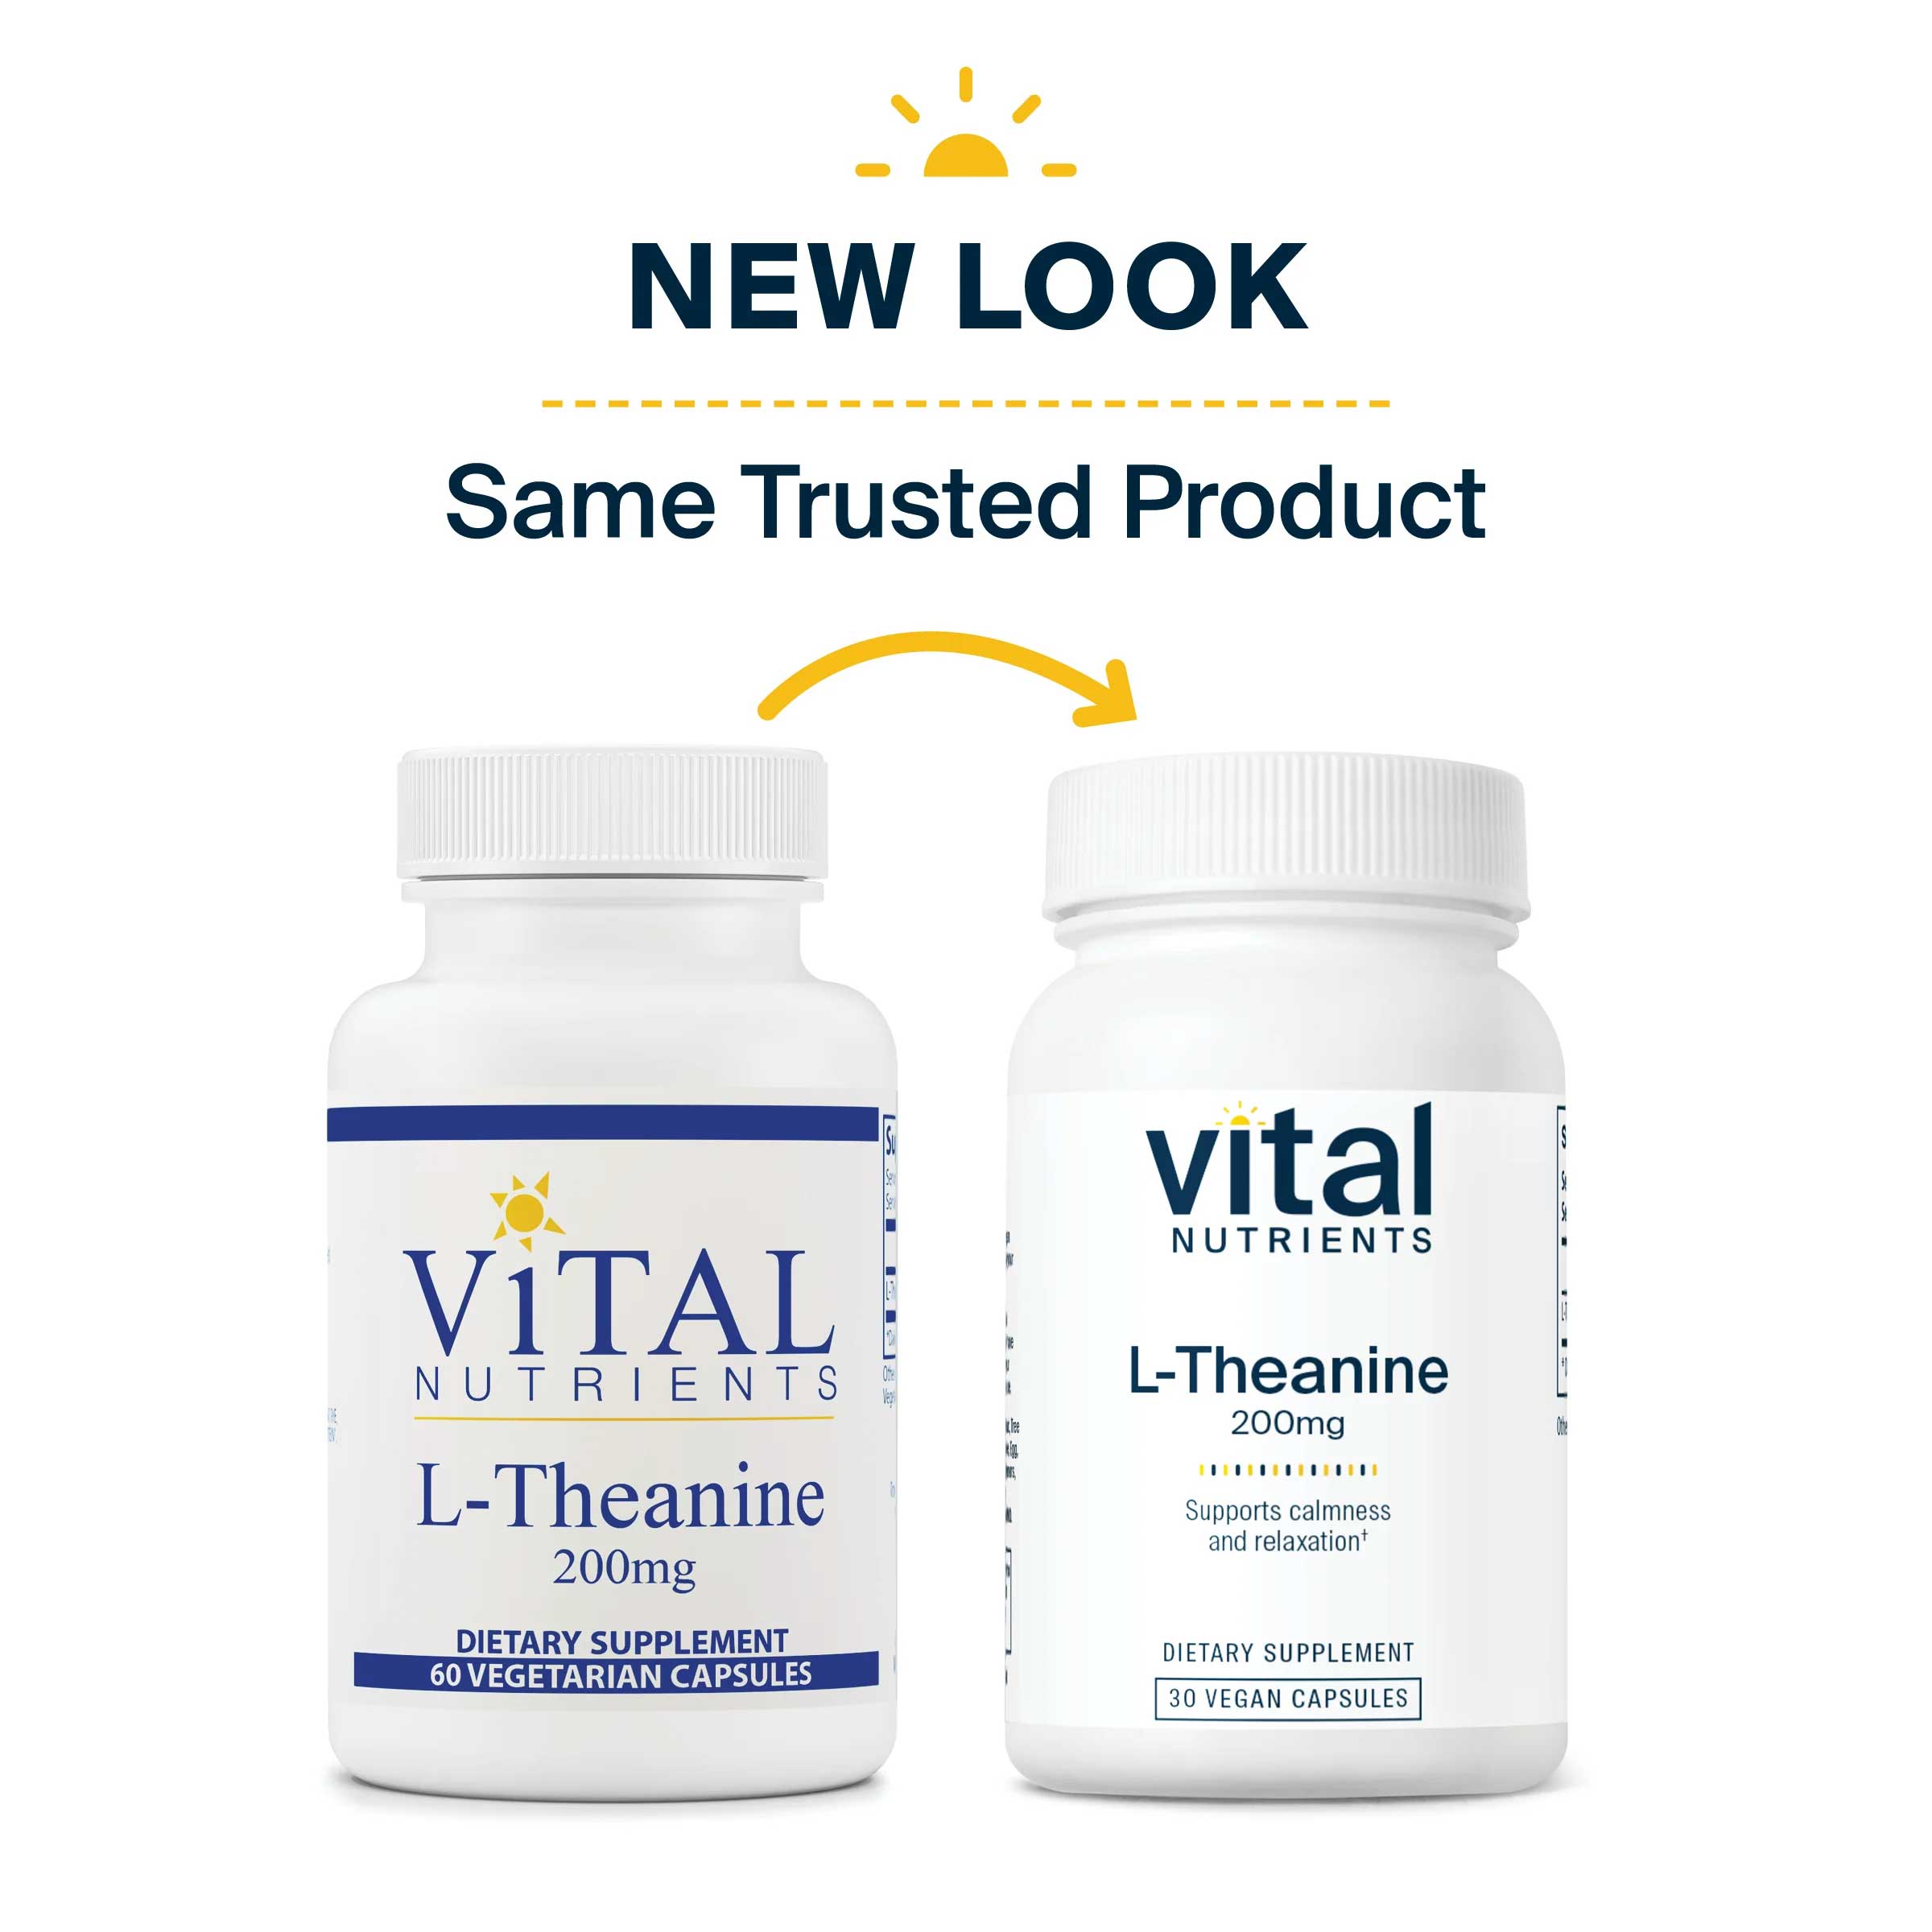 Vital Nutrients L-Theanine 200mg New Look